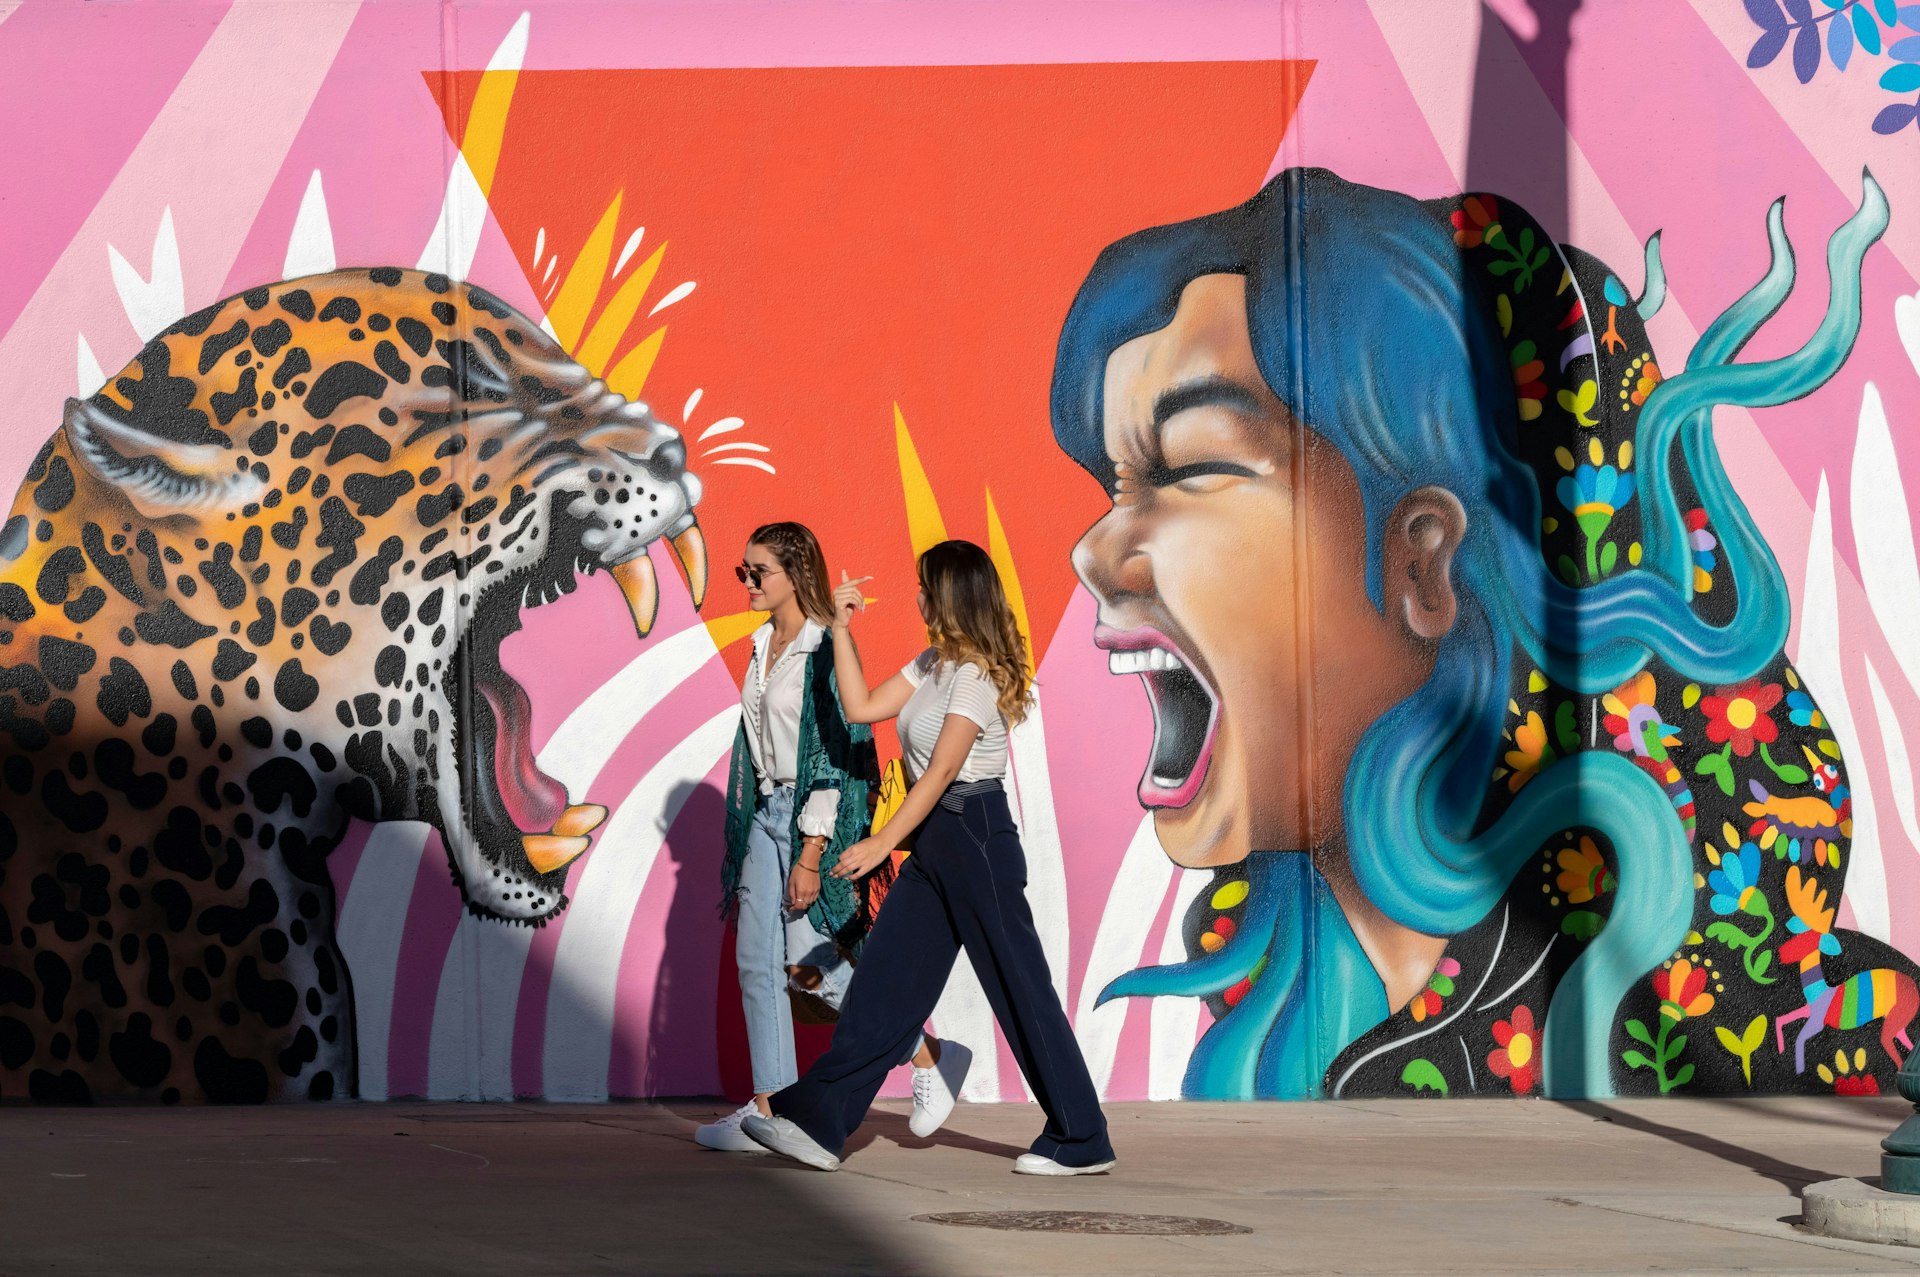 Girlfriends walk past a colorful mural in El Paso, Texas